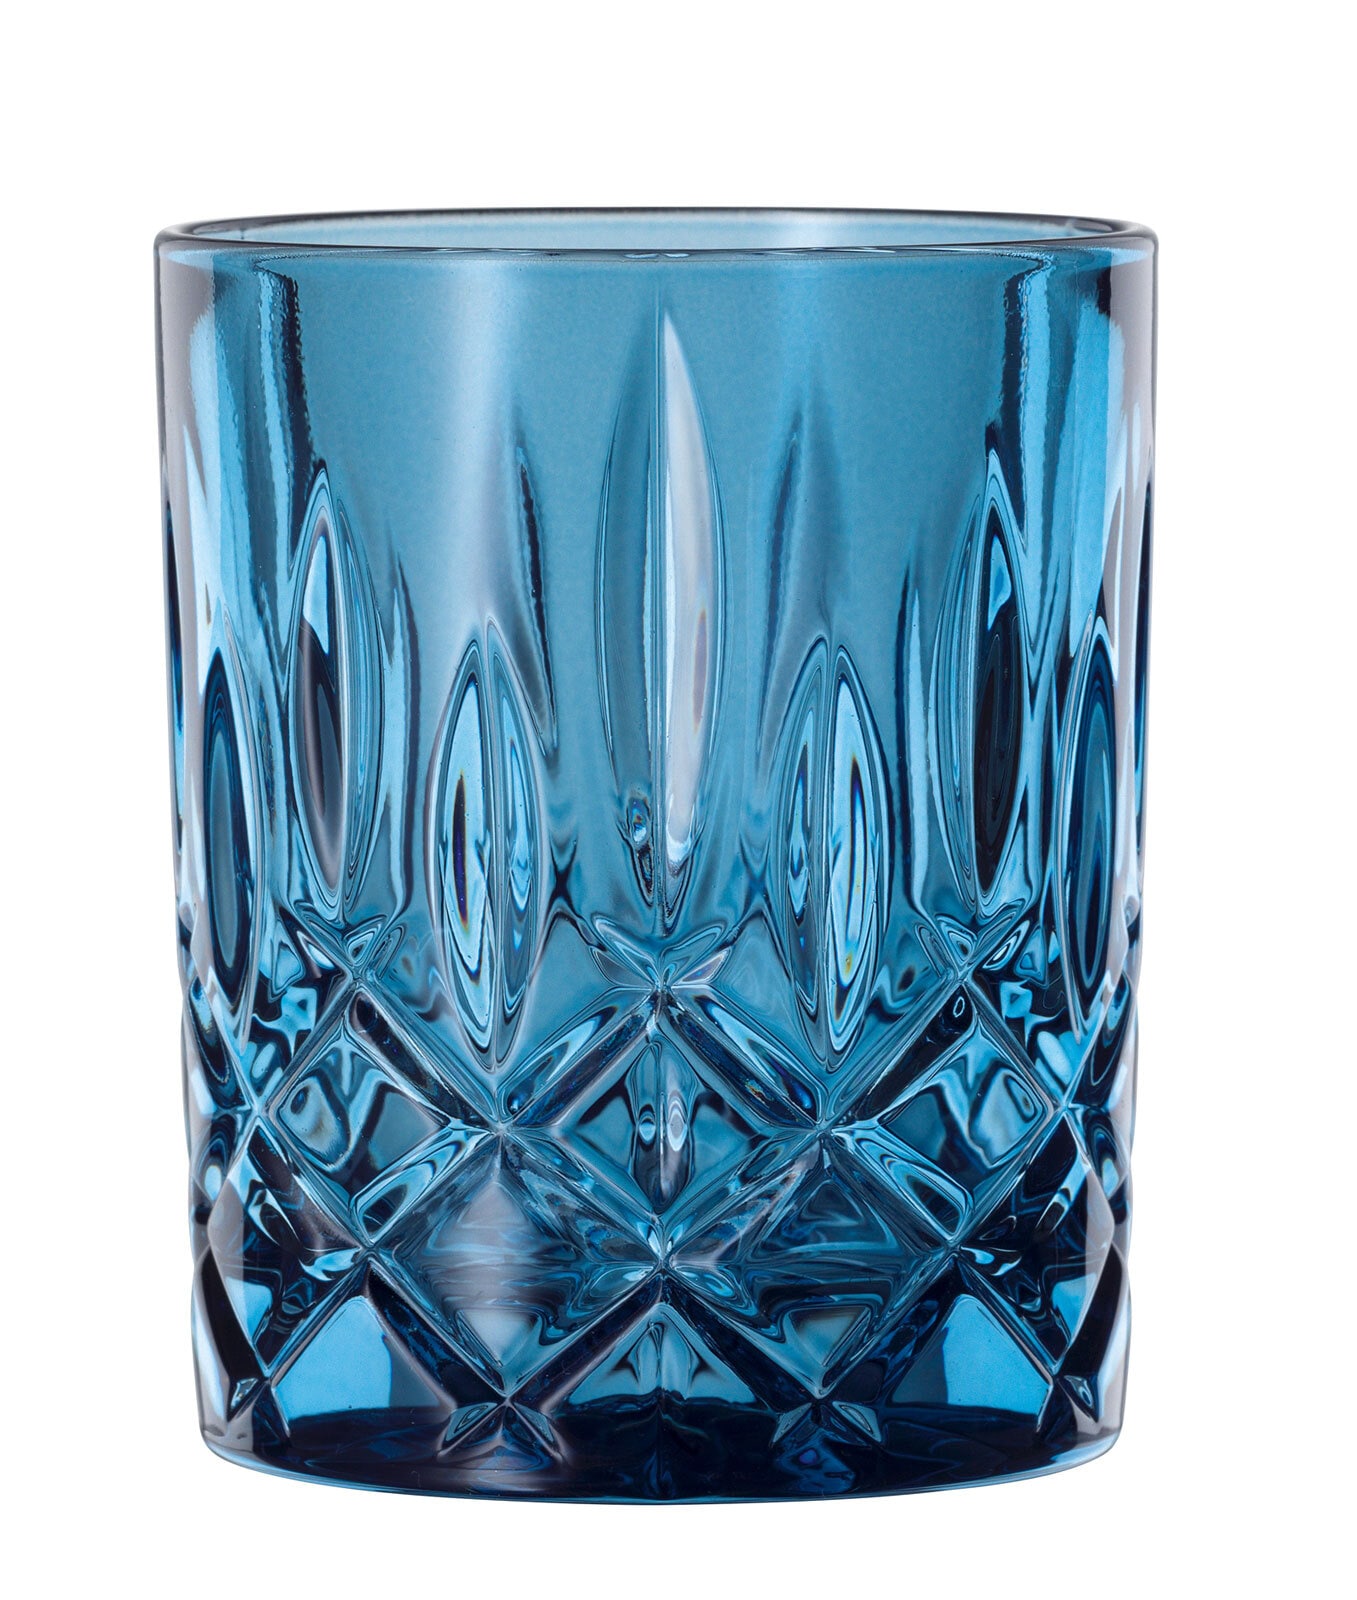 Nachtmann Whiskyglas NOBLESSE 2 Set blau